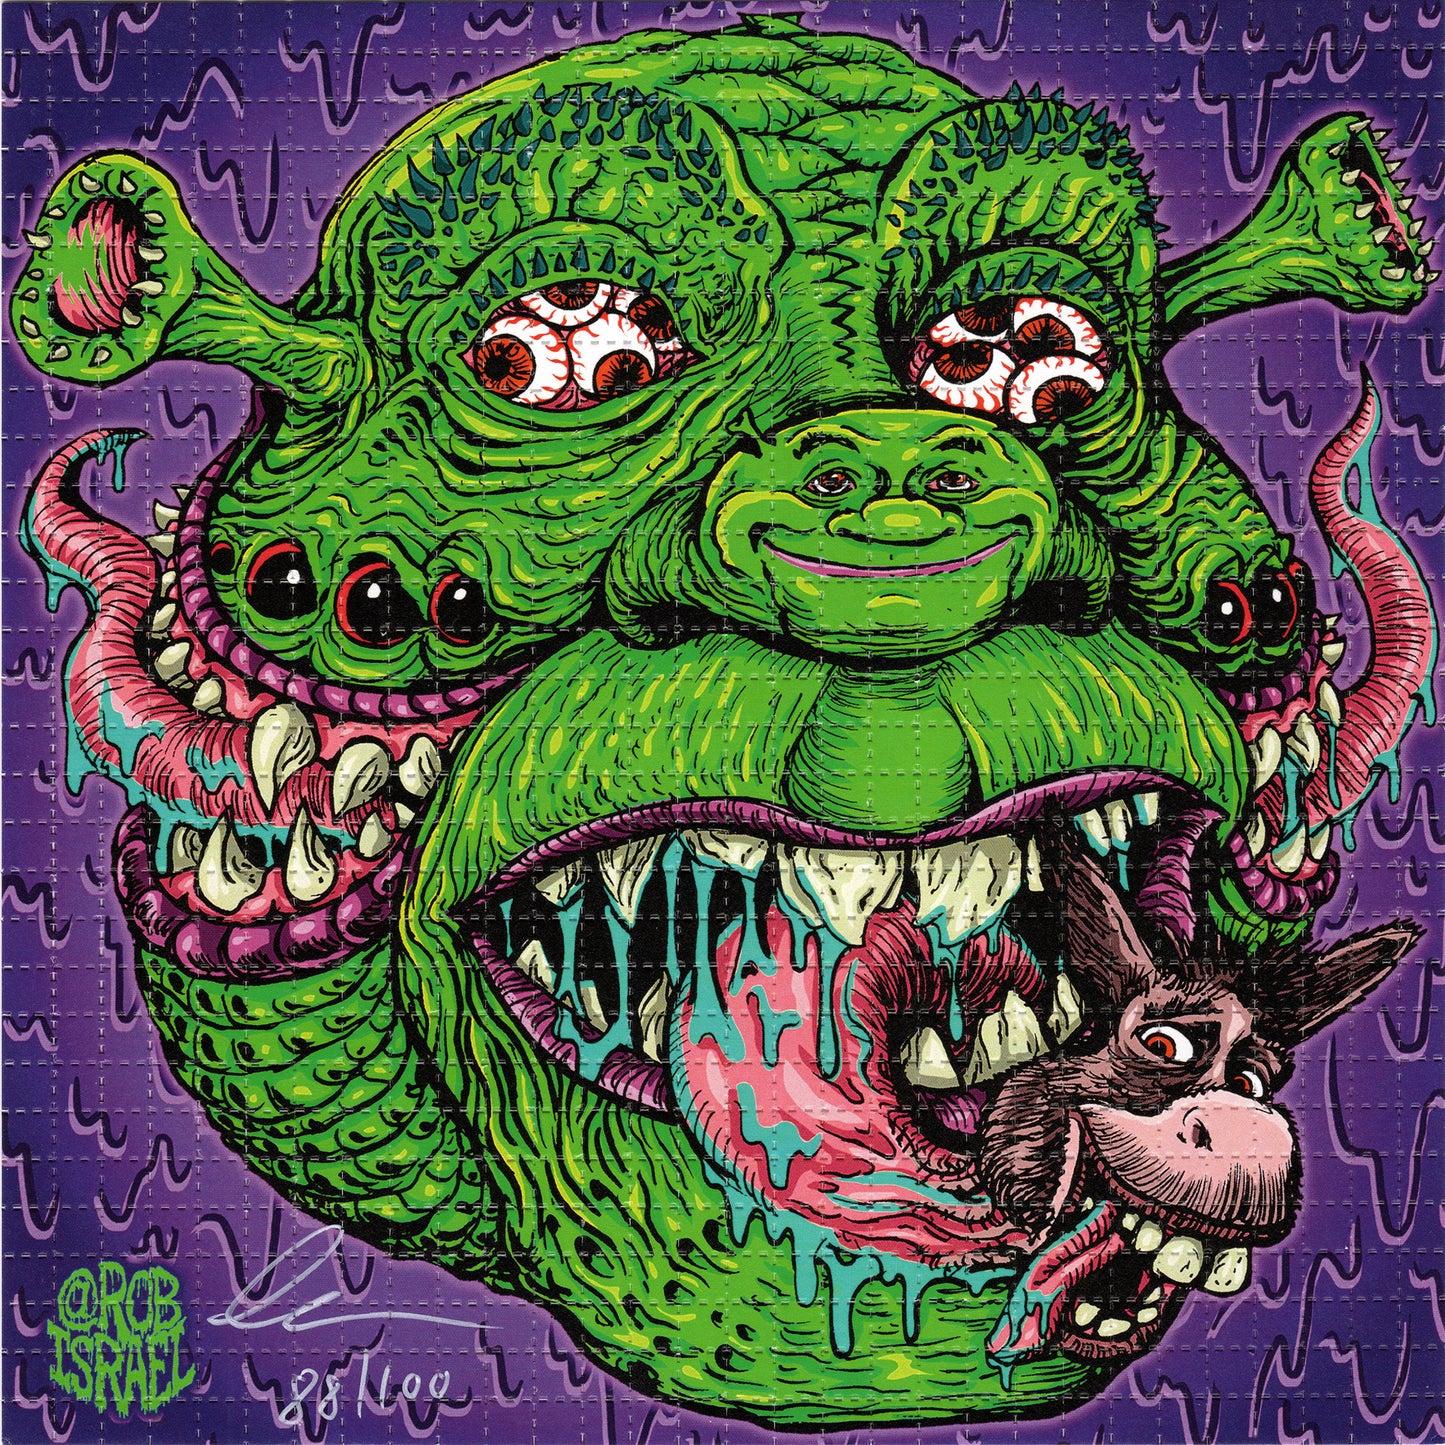 Shreek by Rob Israel SIGNED Limited Edition LSD blotter art print